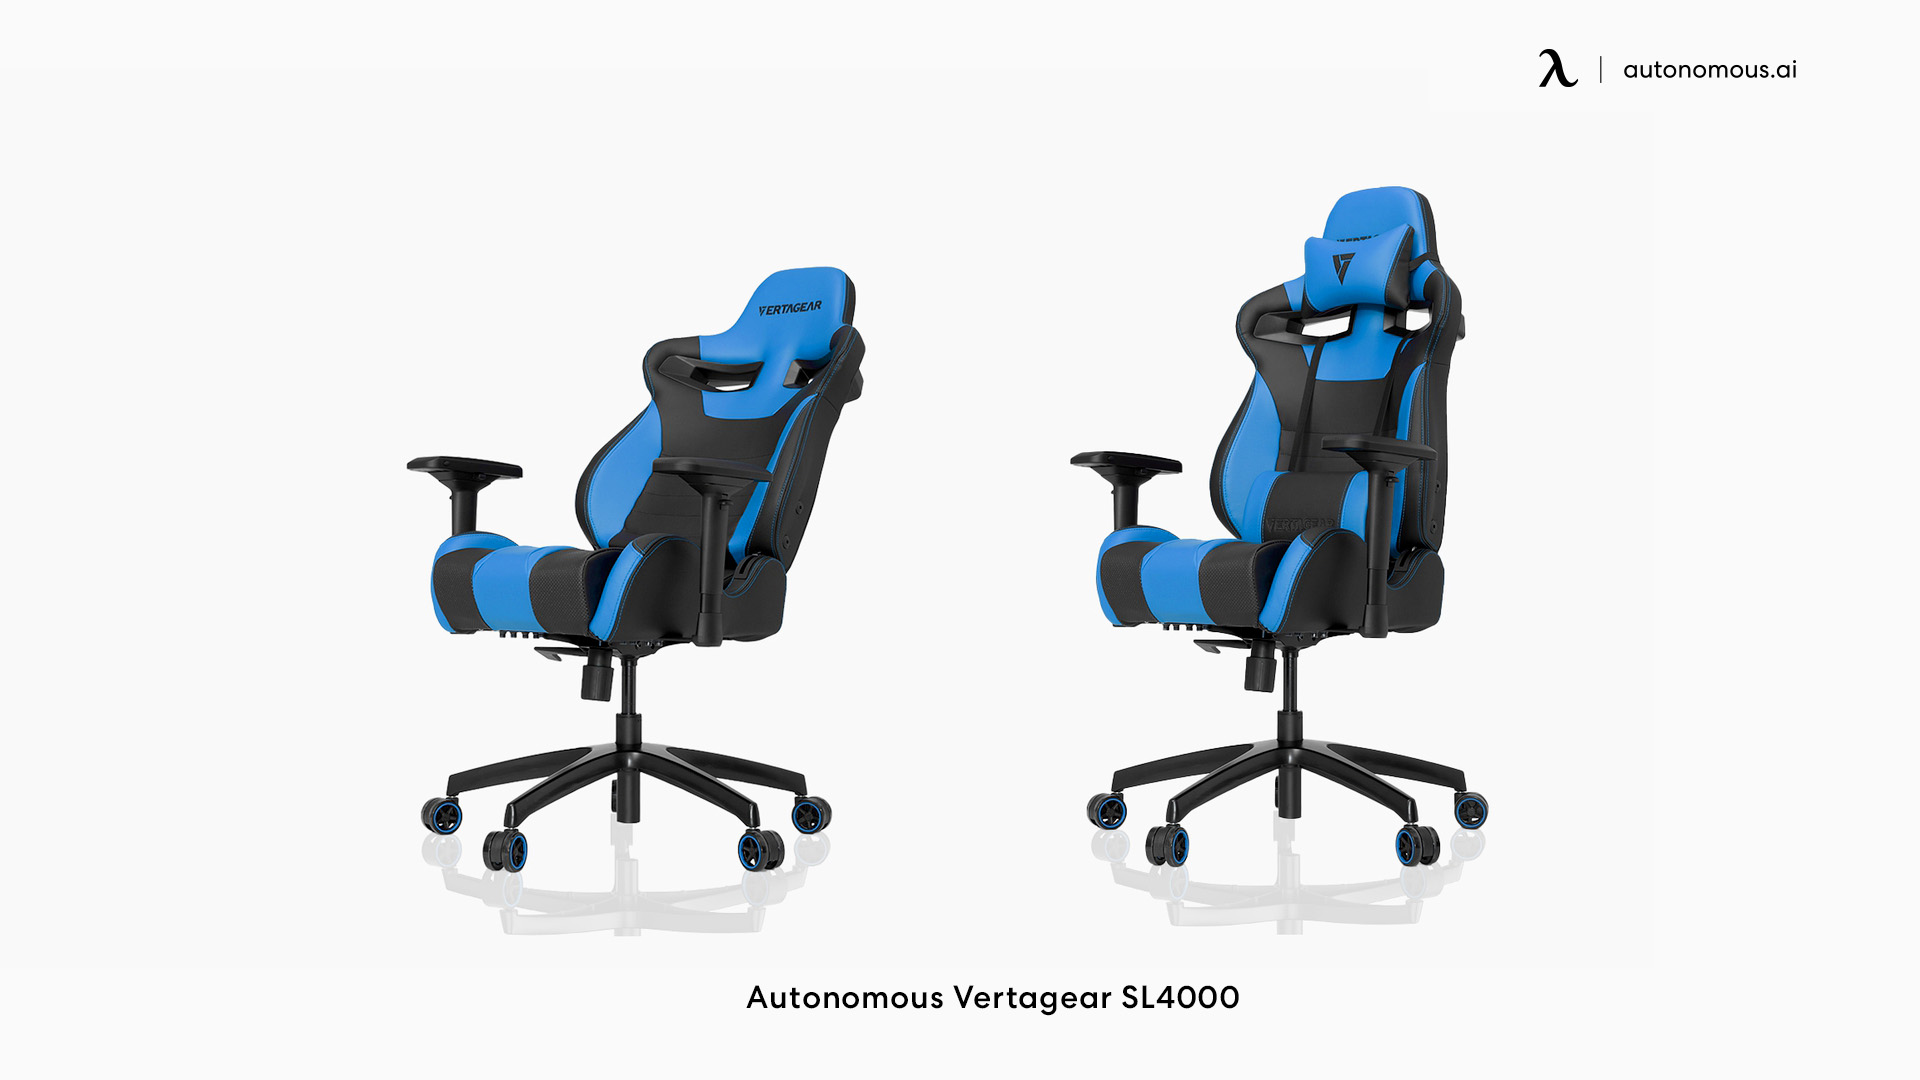 Vertagear Gaming Chair SL4000 heavy duty office chair